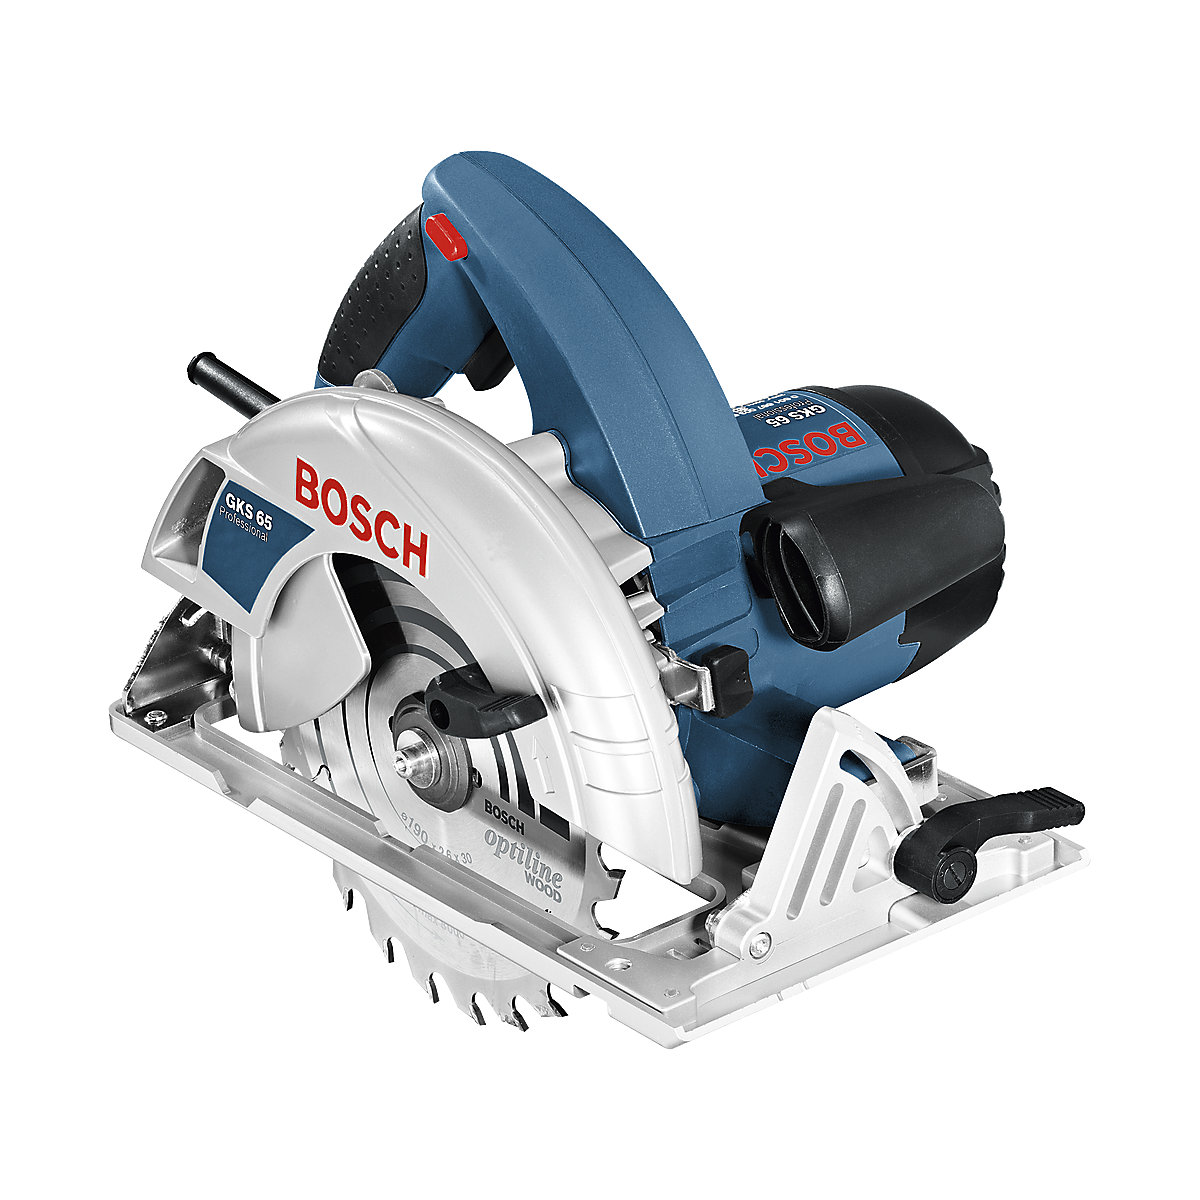 GKS 65 Professional hand-held circular saw – Bosch